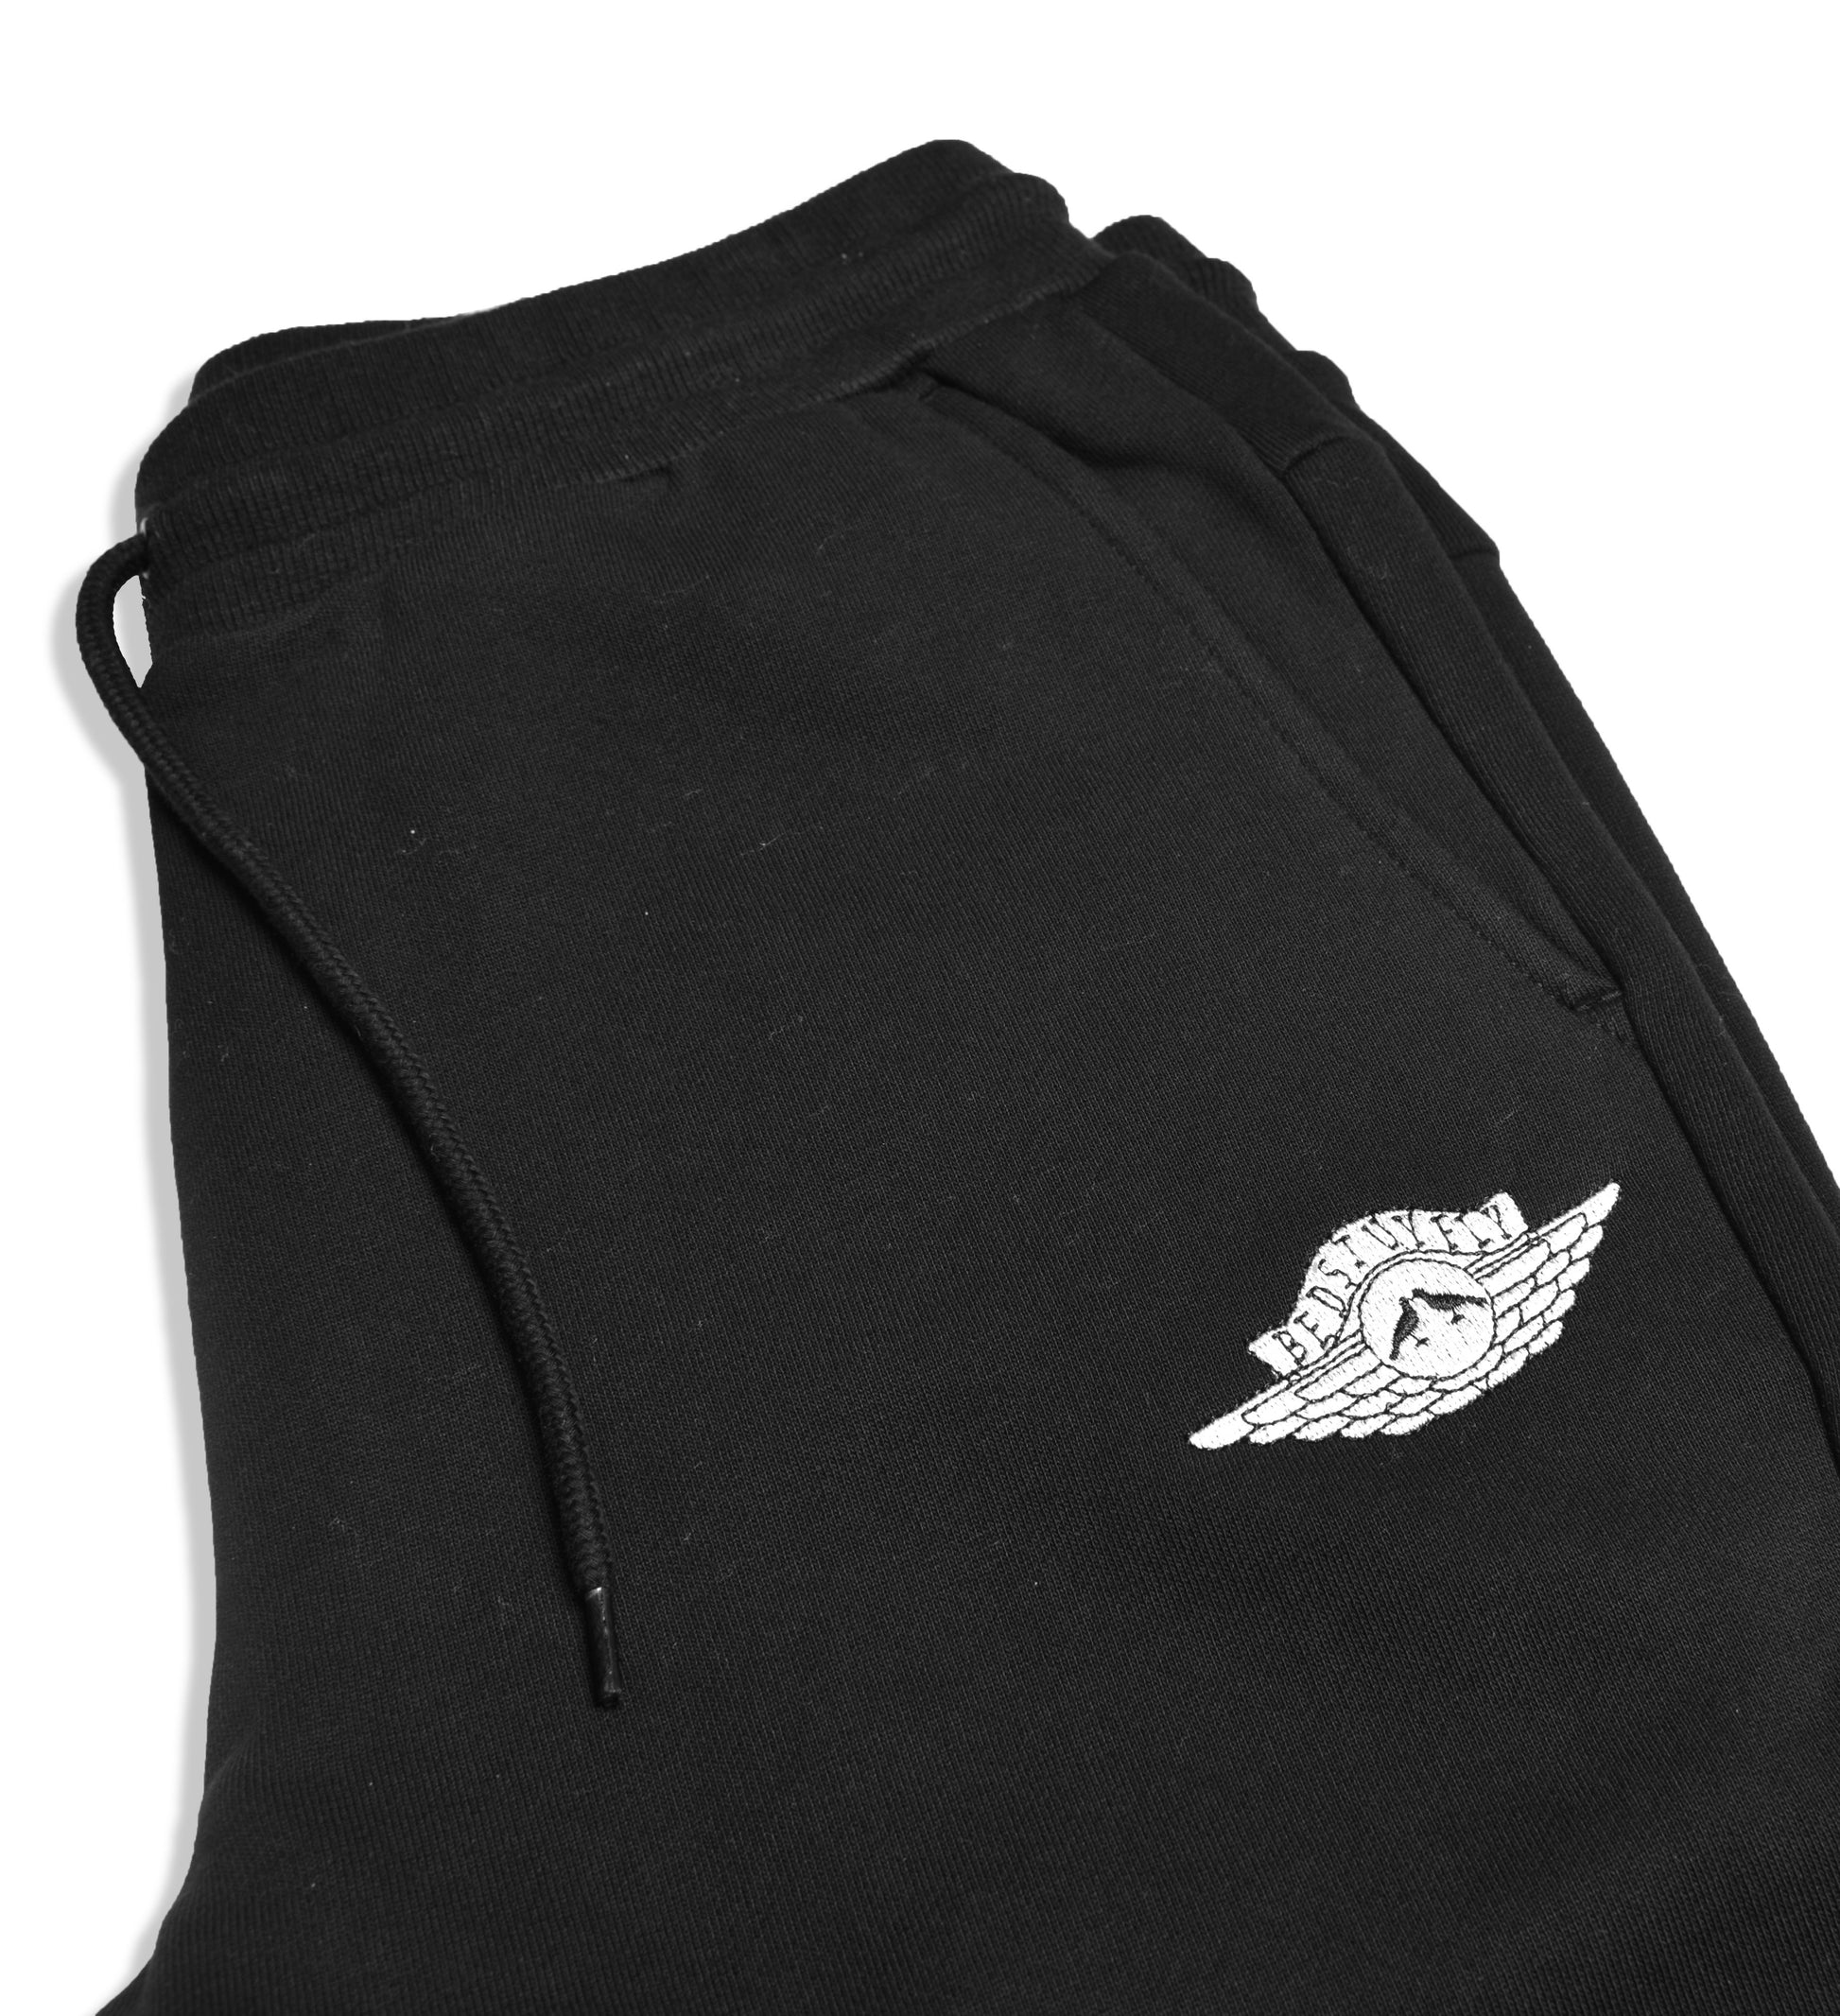 Air Bedstuyfly Sweatpants (Black) - Bedstuyfly